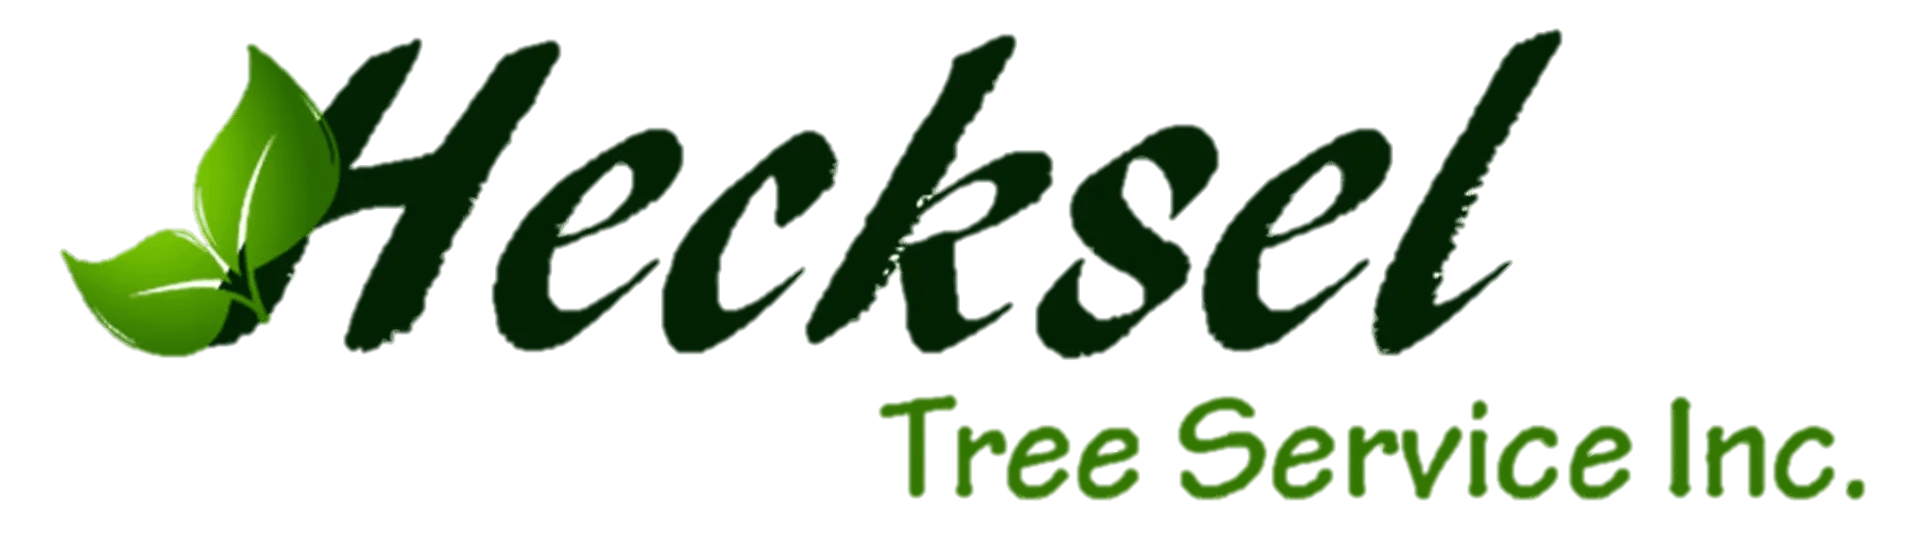 Hecksel Tree Service